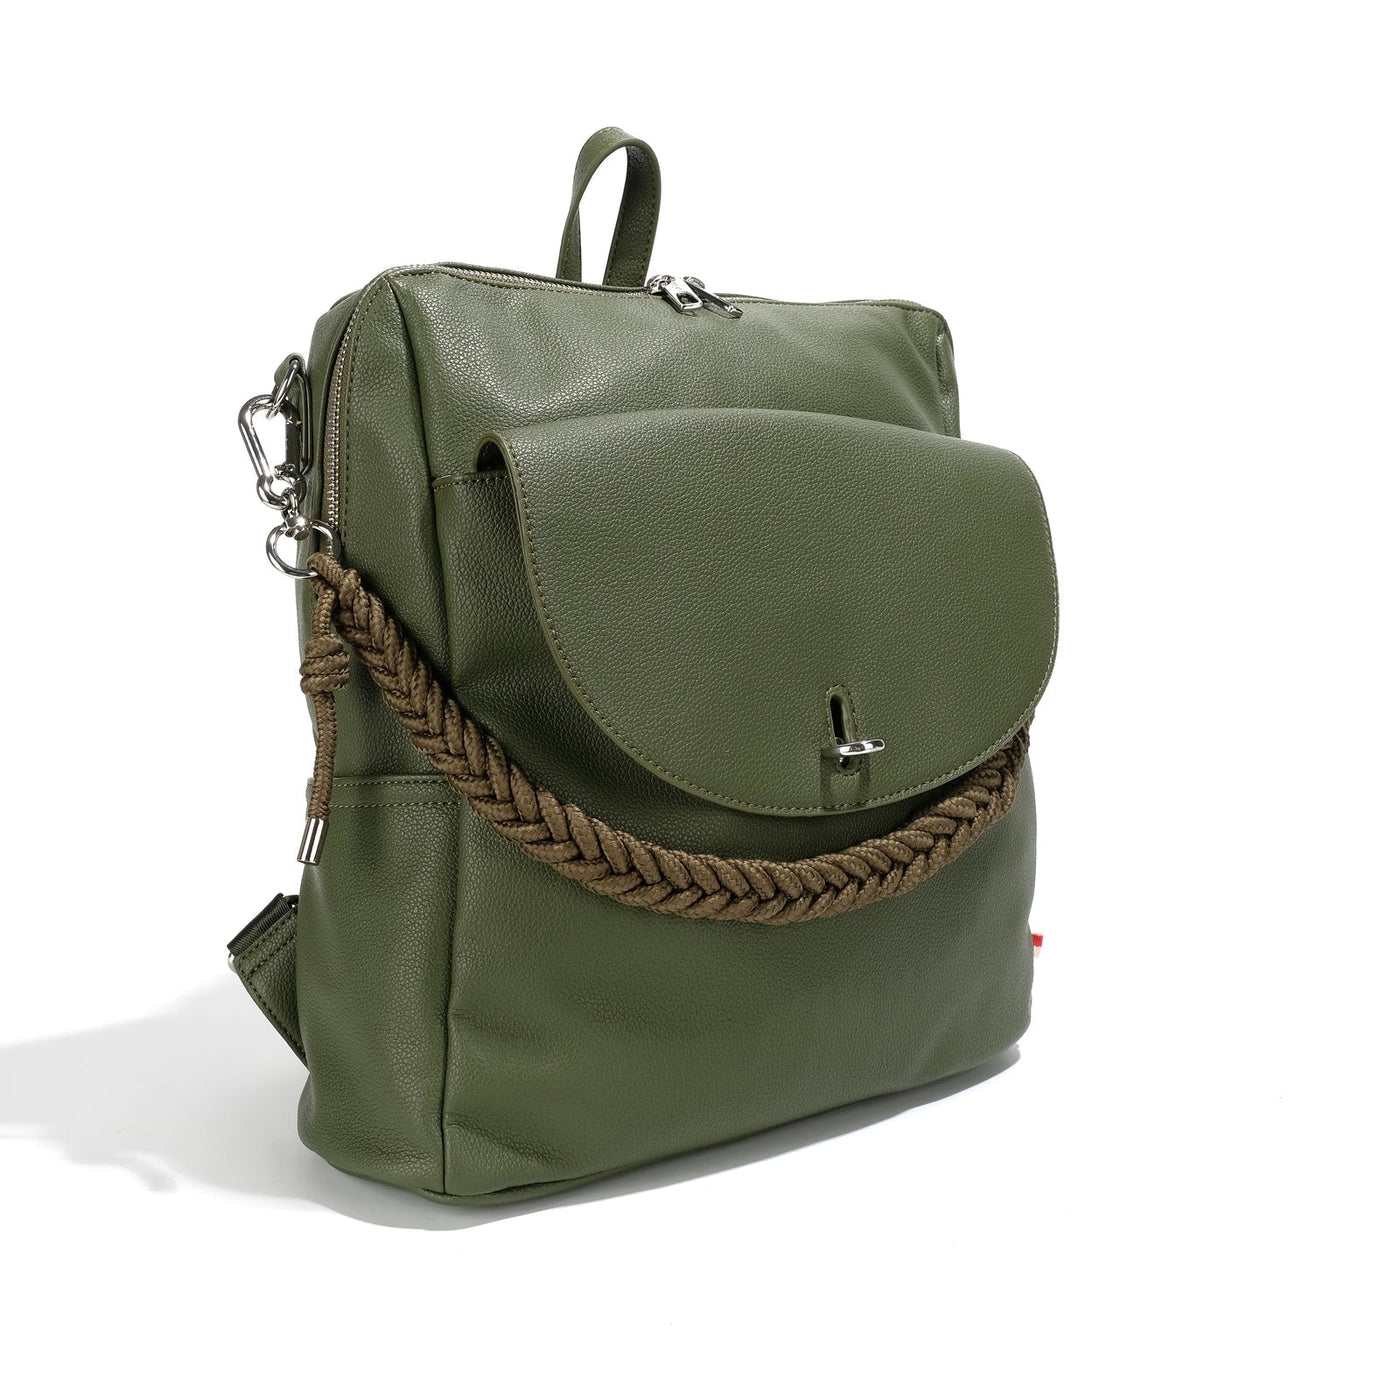 Braid & Lock ‘Buena’ Shoulder bag/backpack - khaki - Blue Sky Clothing & Lingerie